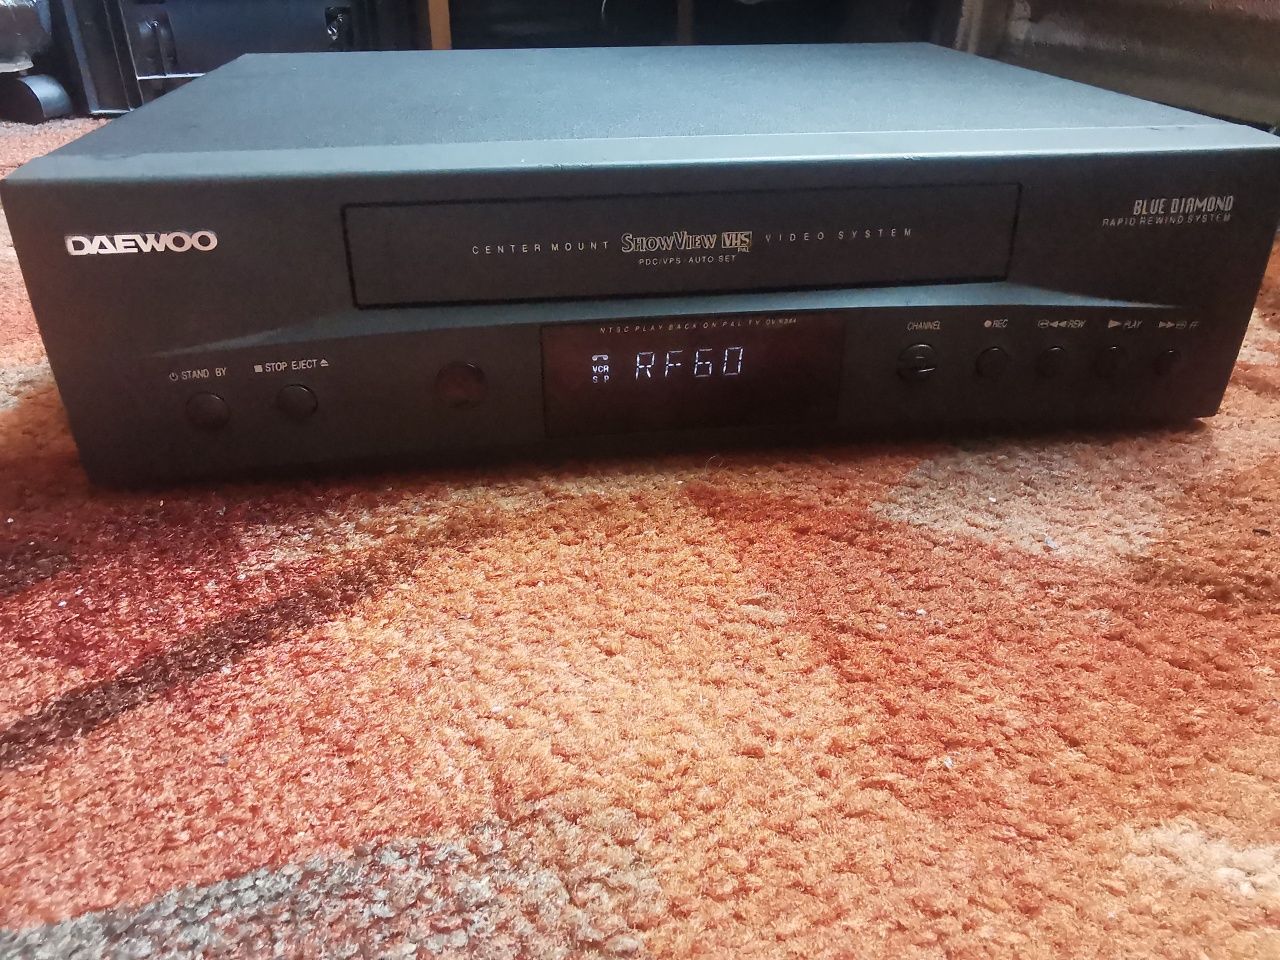 Video recorder DAEWOO made in U. K.